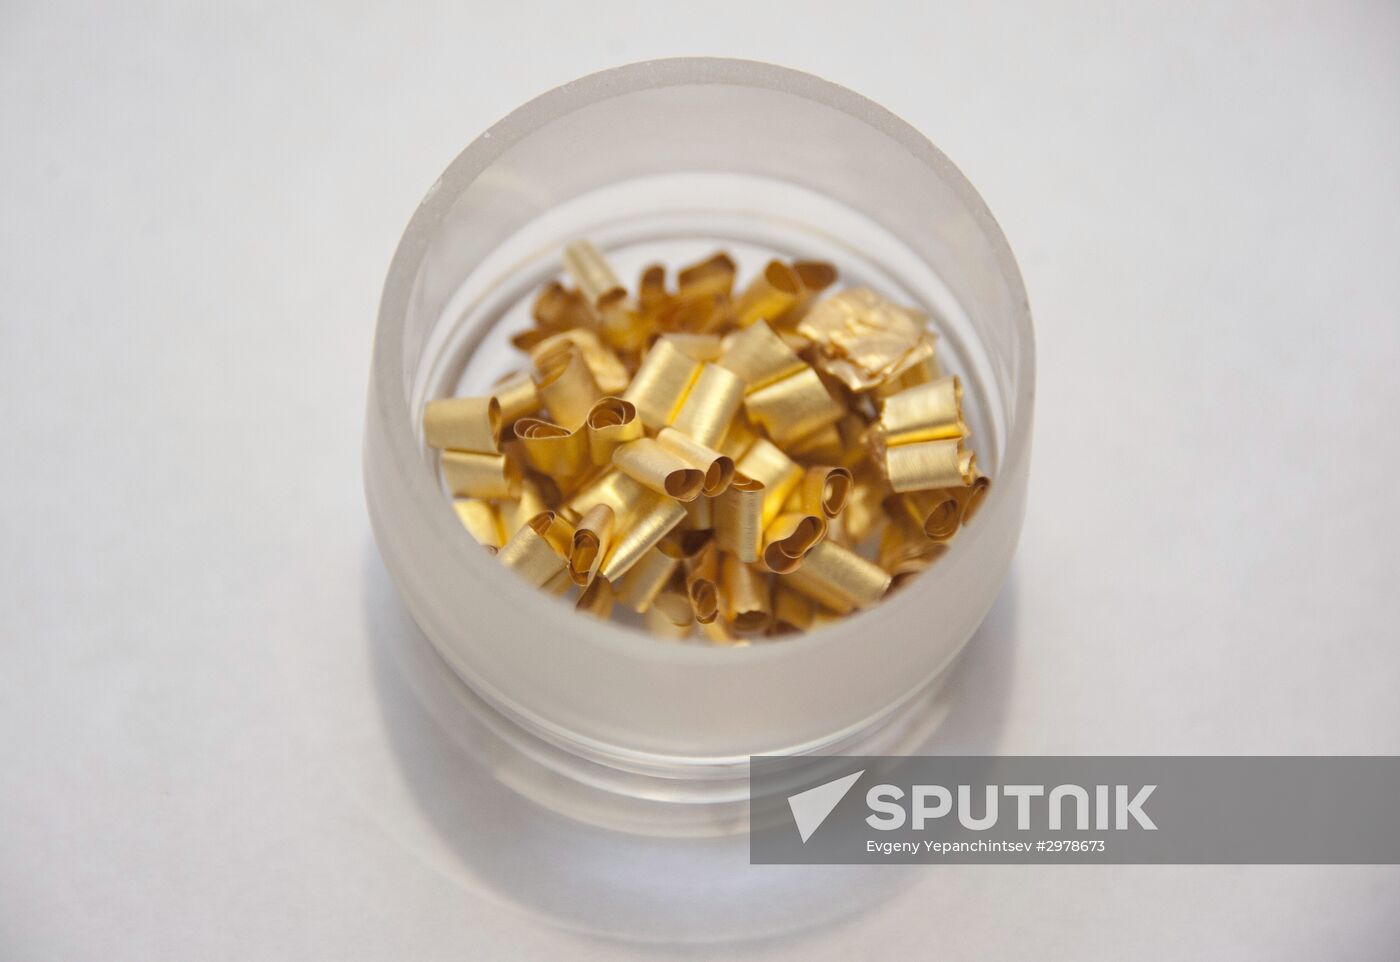 Savkinskoye gold deposit in Trans-Baikal Territory